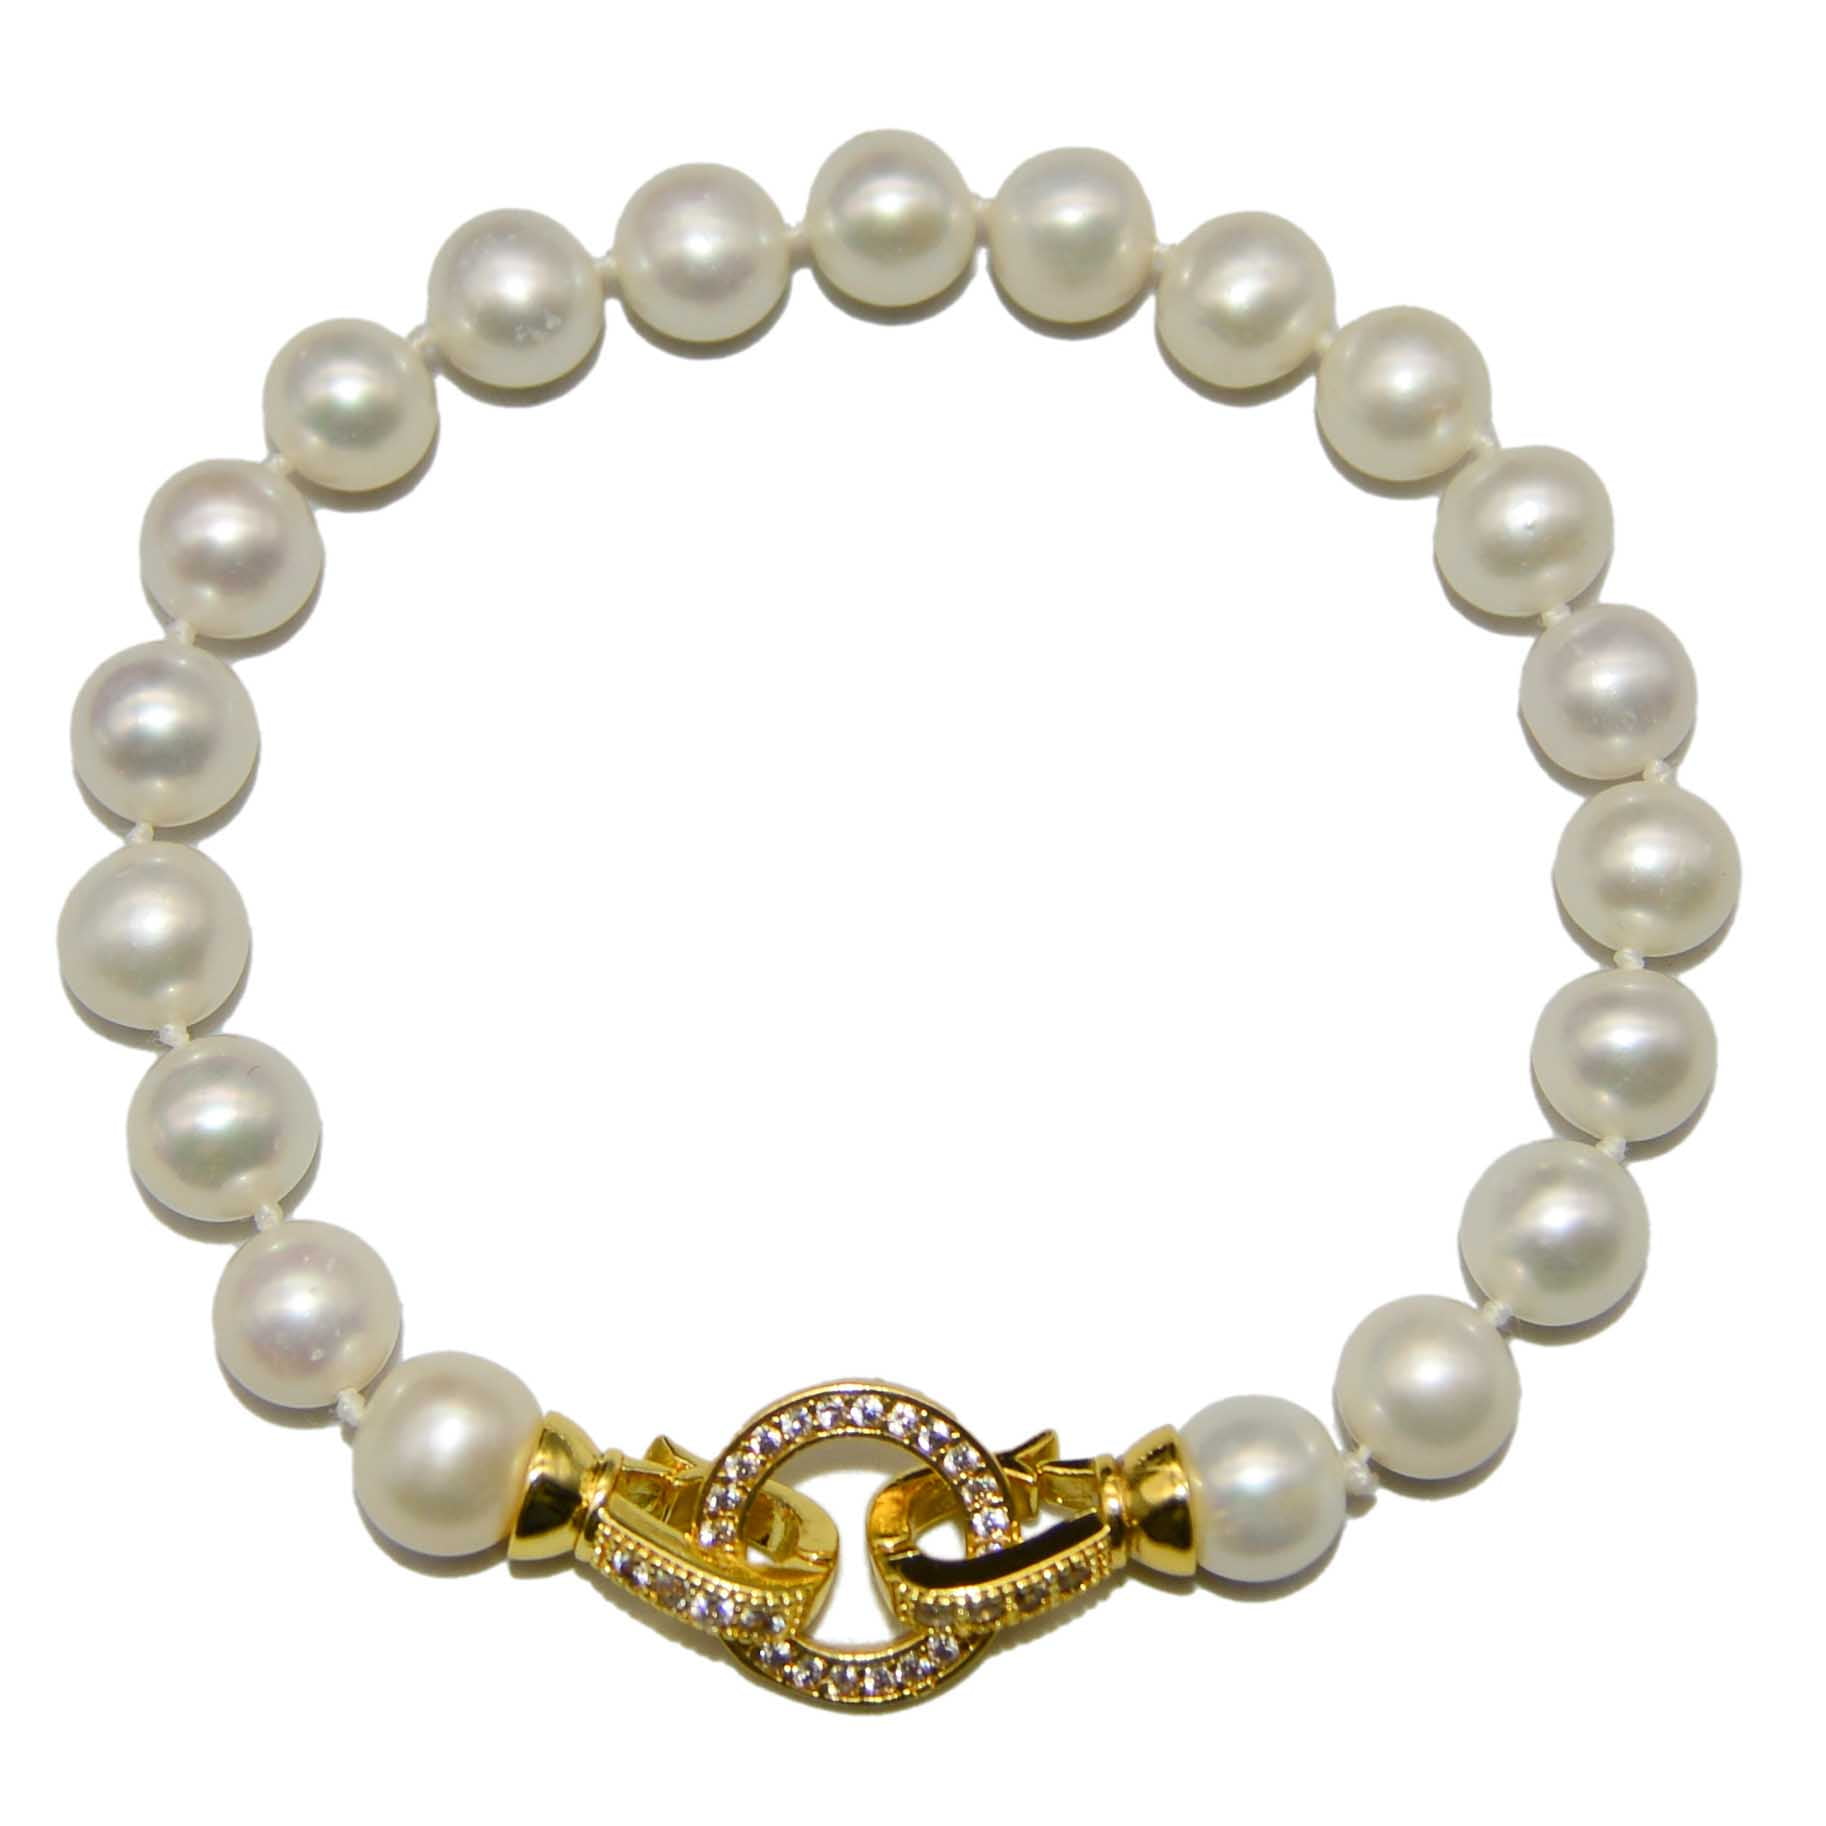 Pearl Statement Bracelet, Silver Grey Multi Strand Bracelet, Chunky Braided  on Silver Chain - Etsy | Statement bracelet, Multi strand bracelet,  Matching necklaces